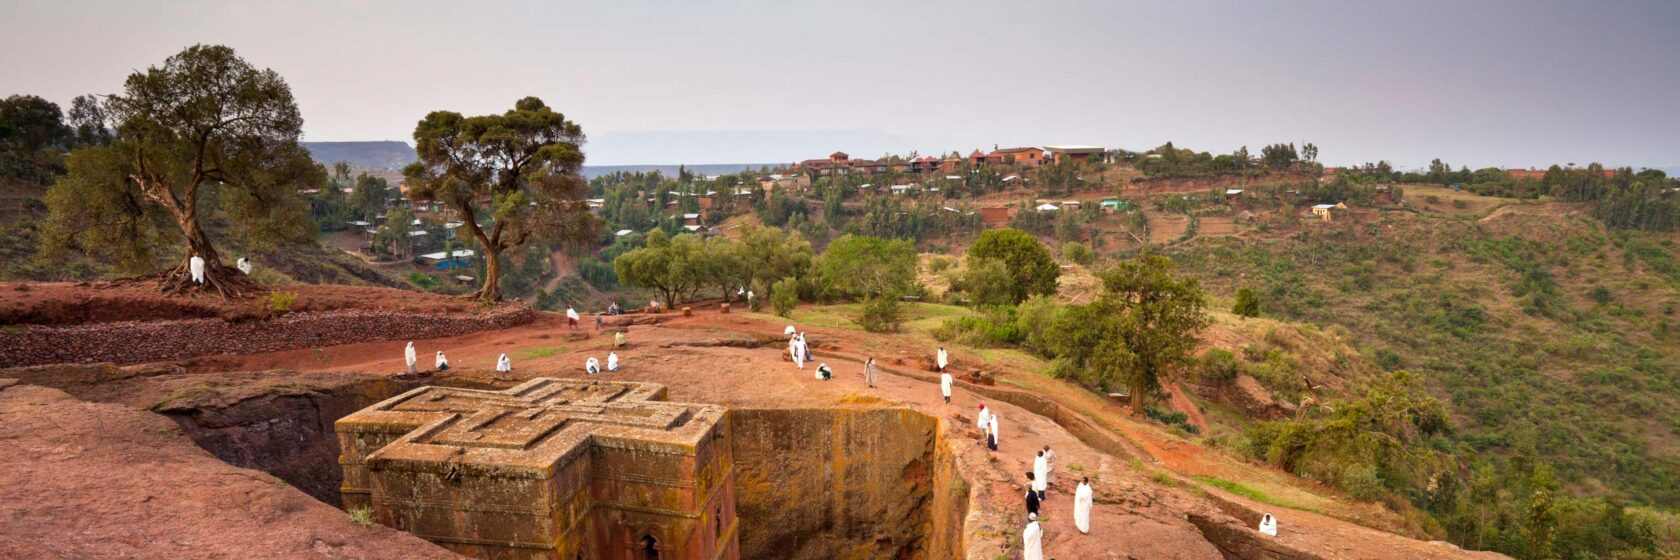 Bet Giyorgis rock hewn church at dawn Lalibela Ethiopia.